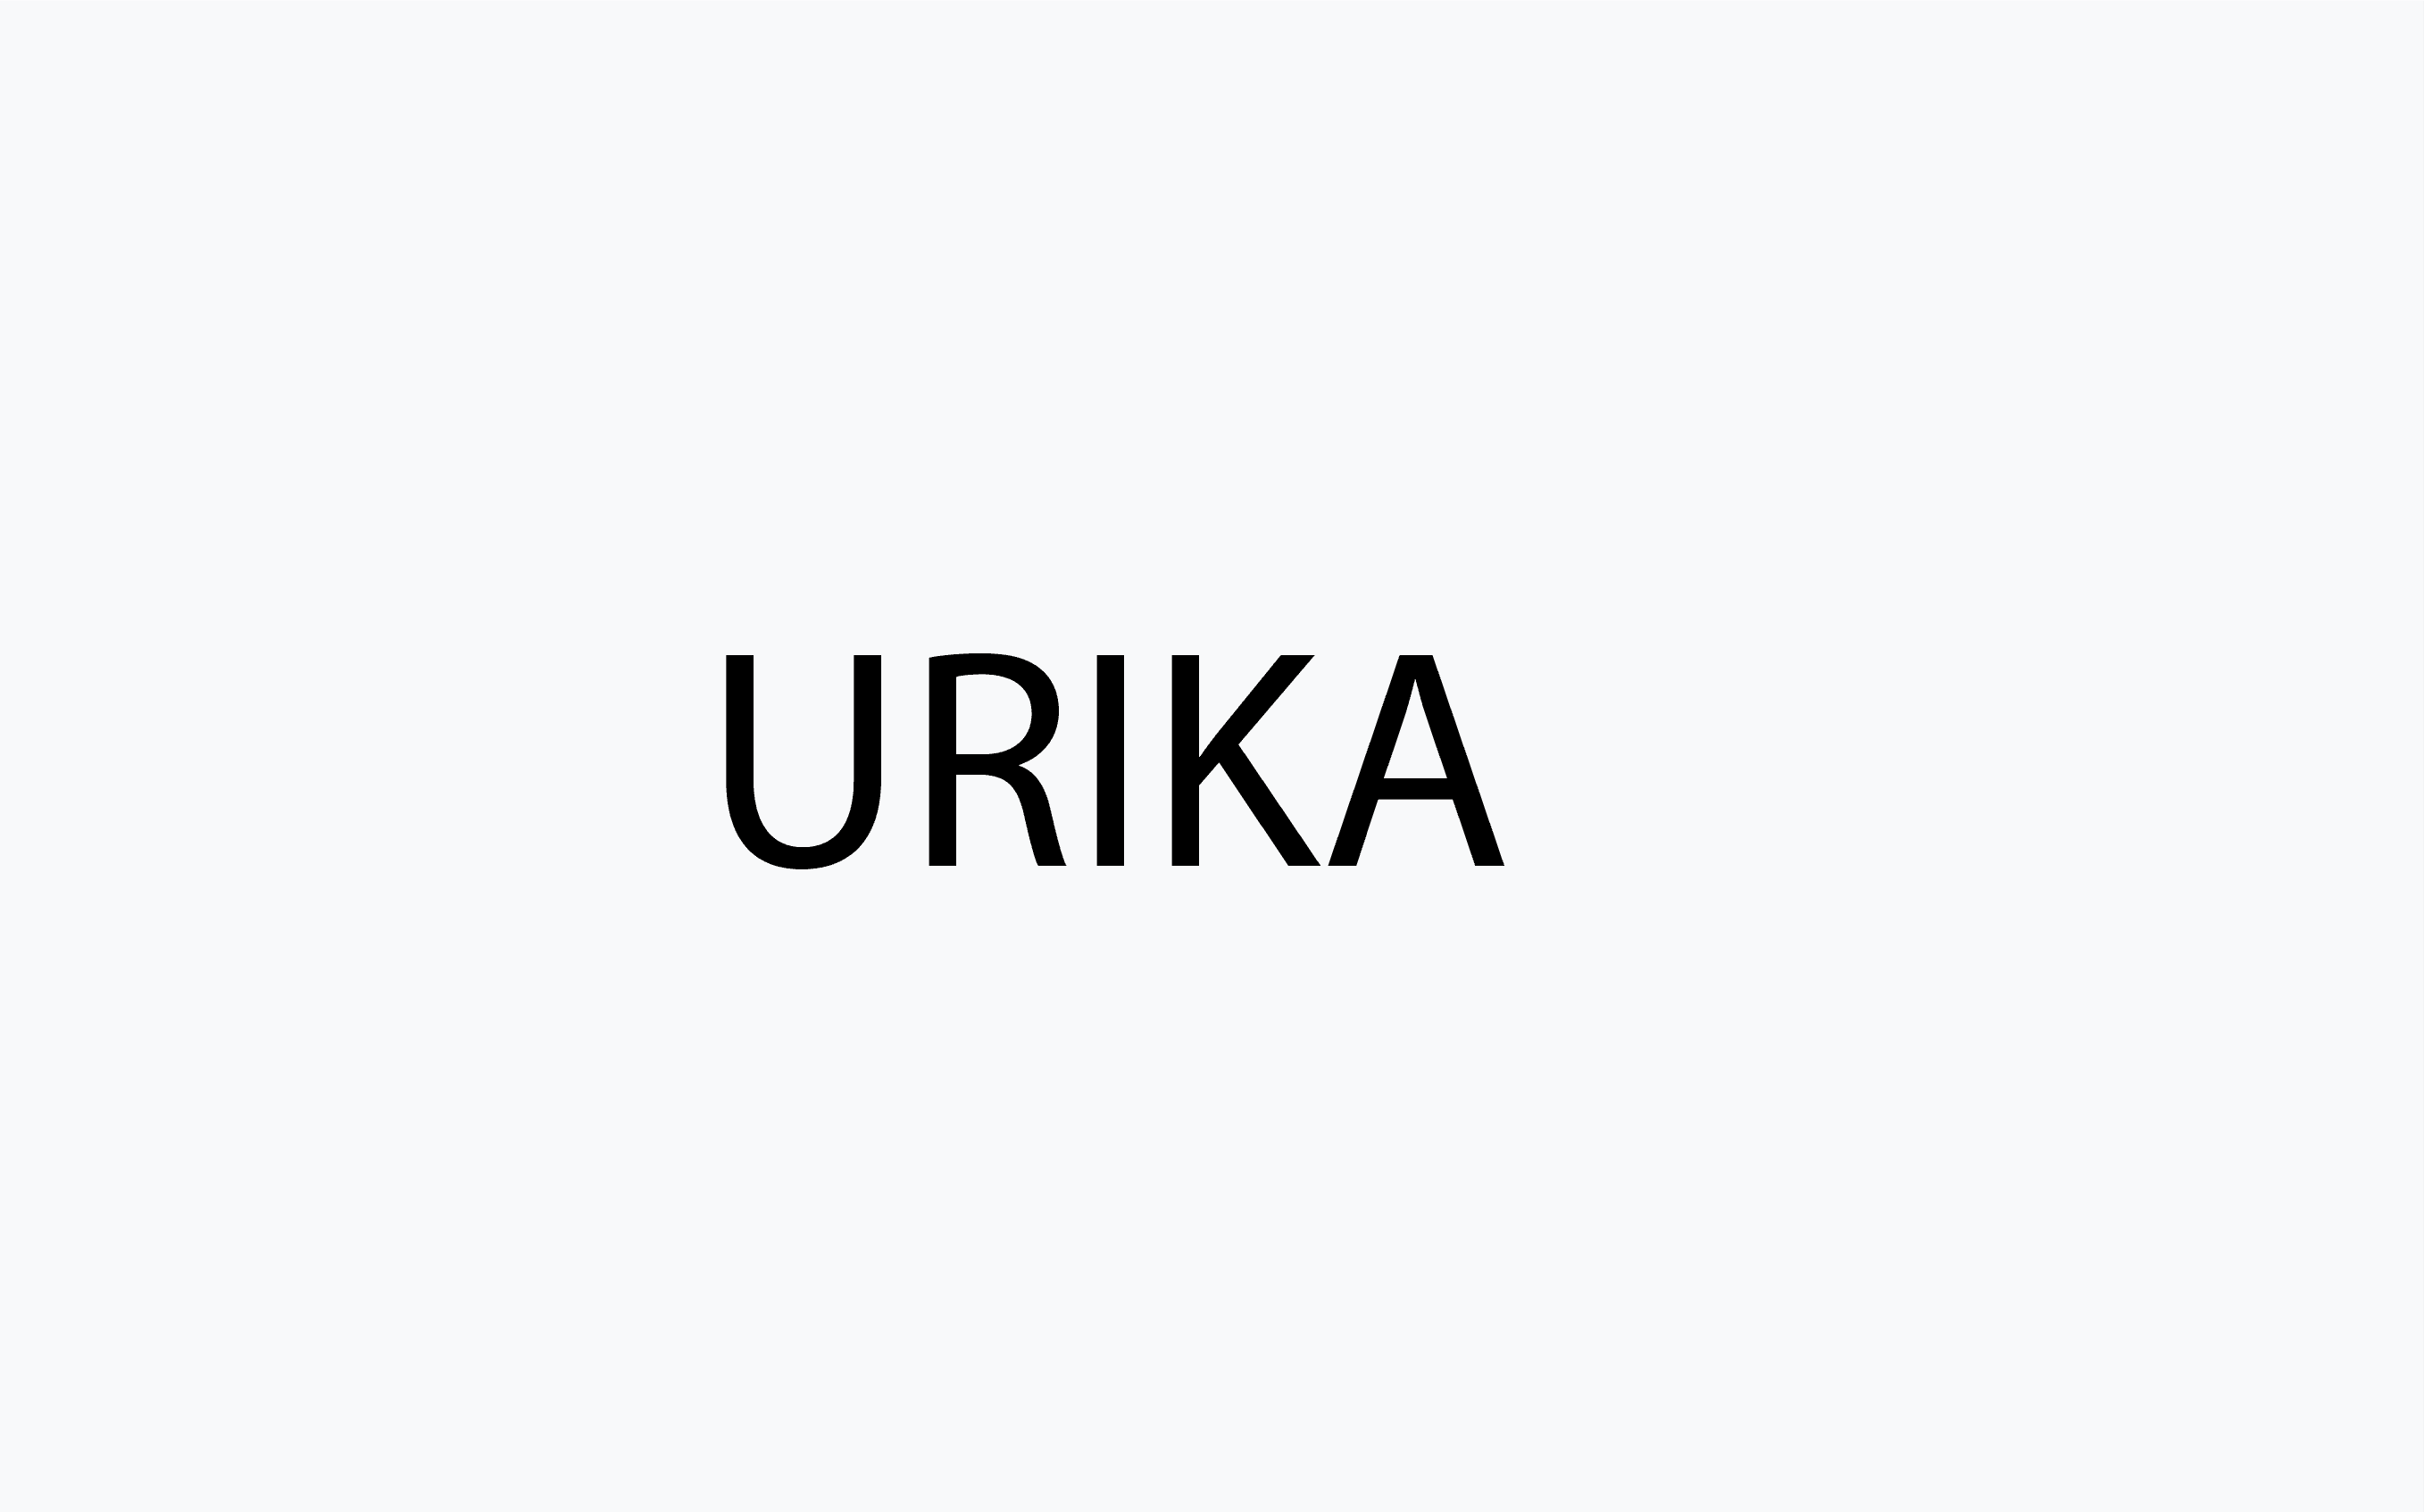 Urika category